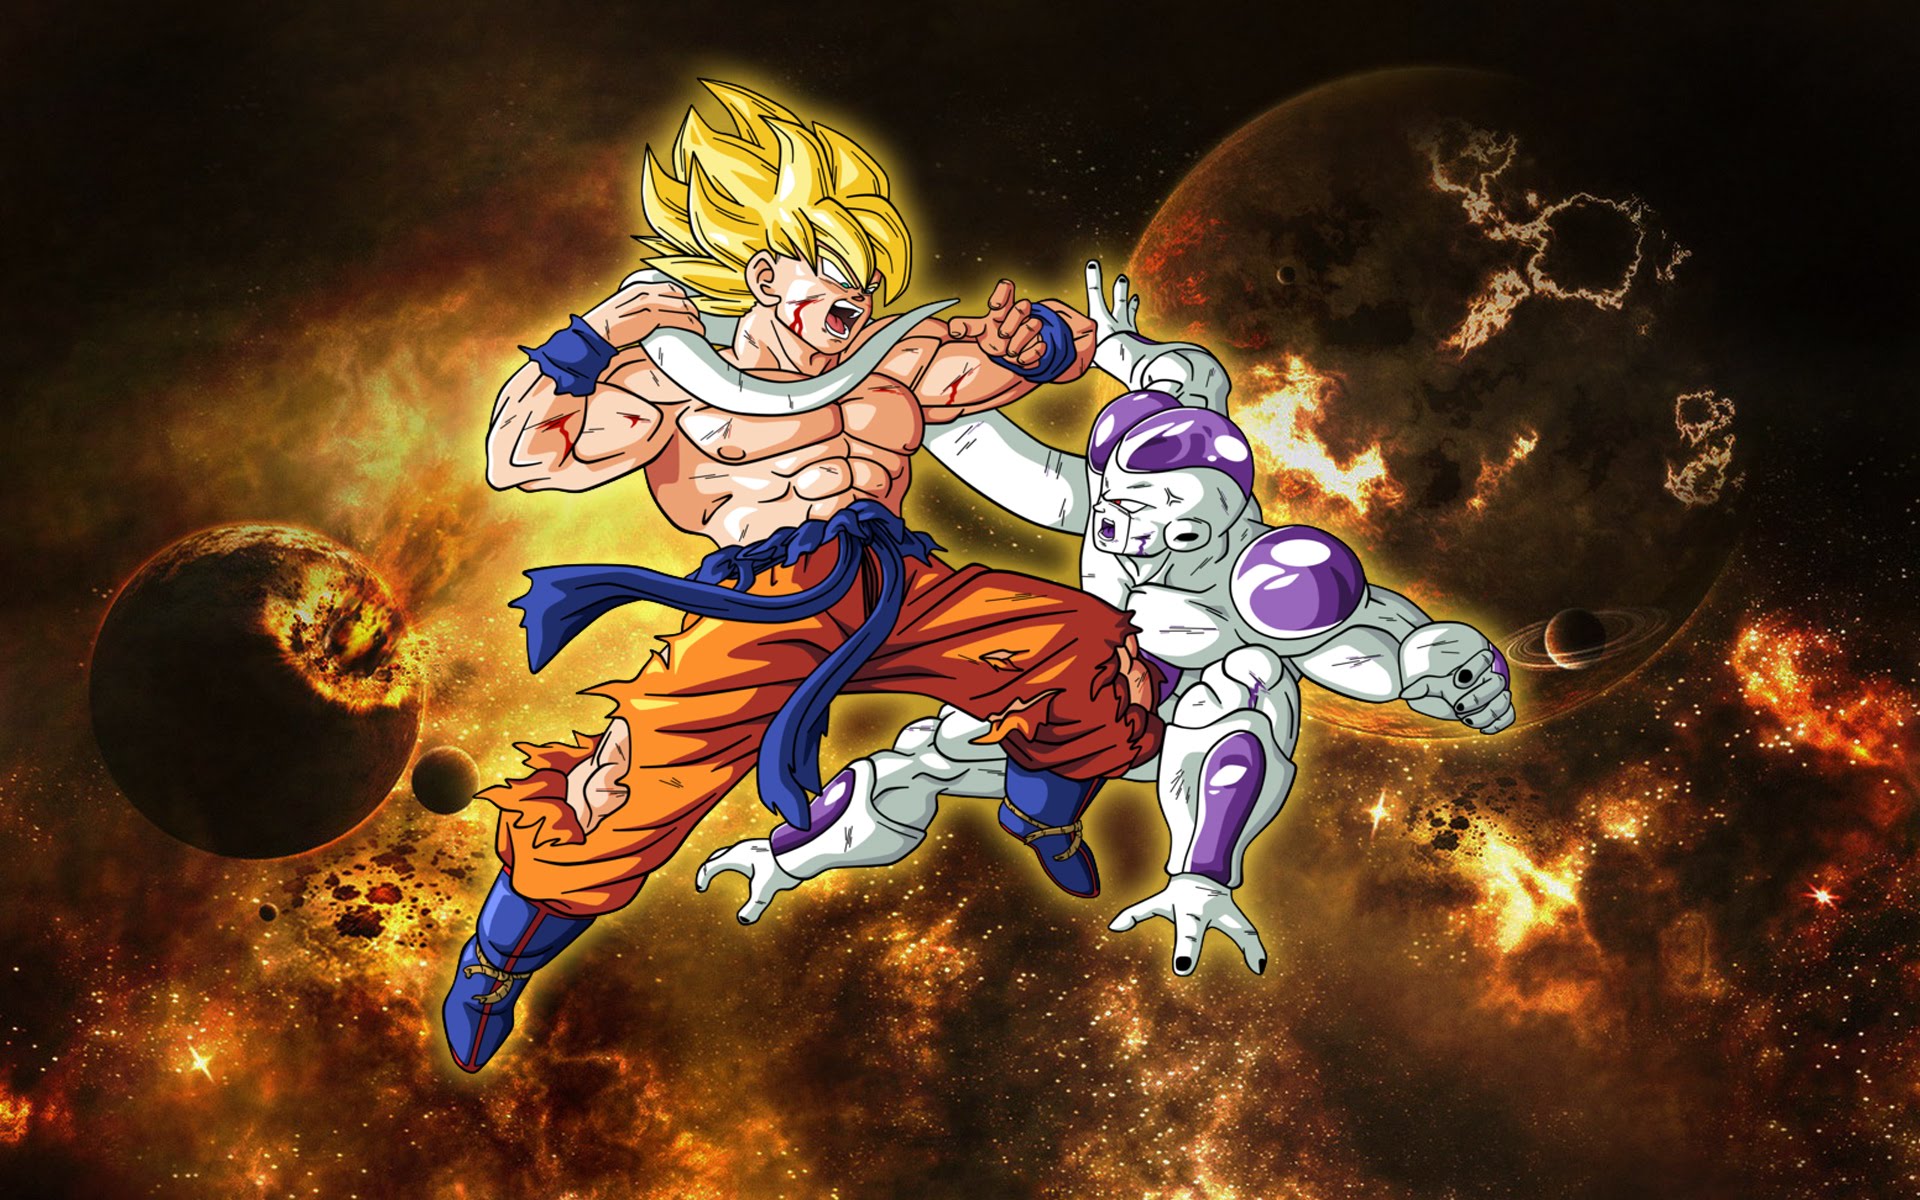 Goku vs frieza wallpaper